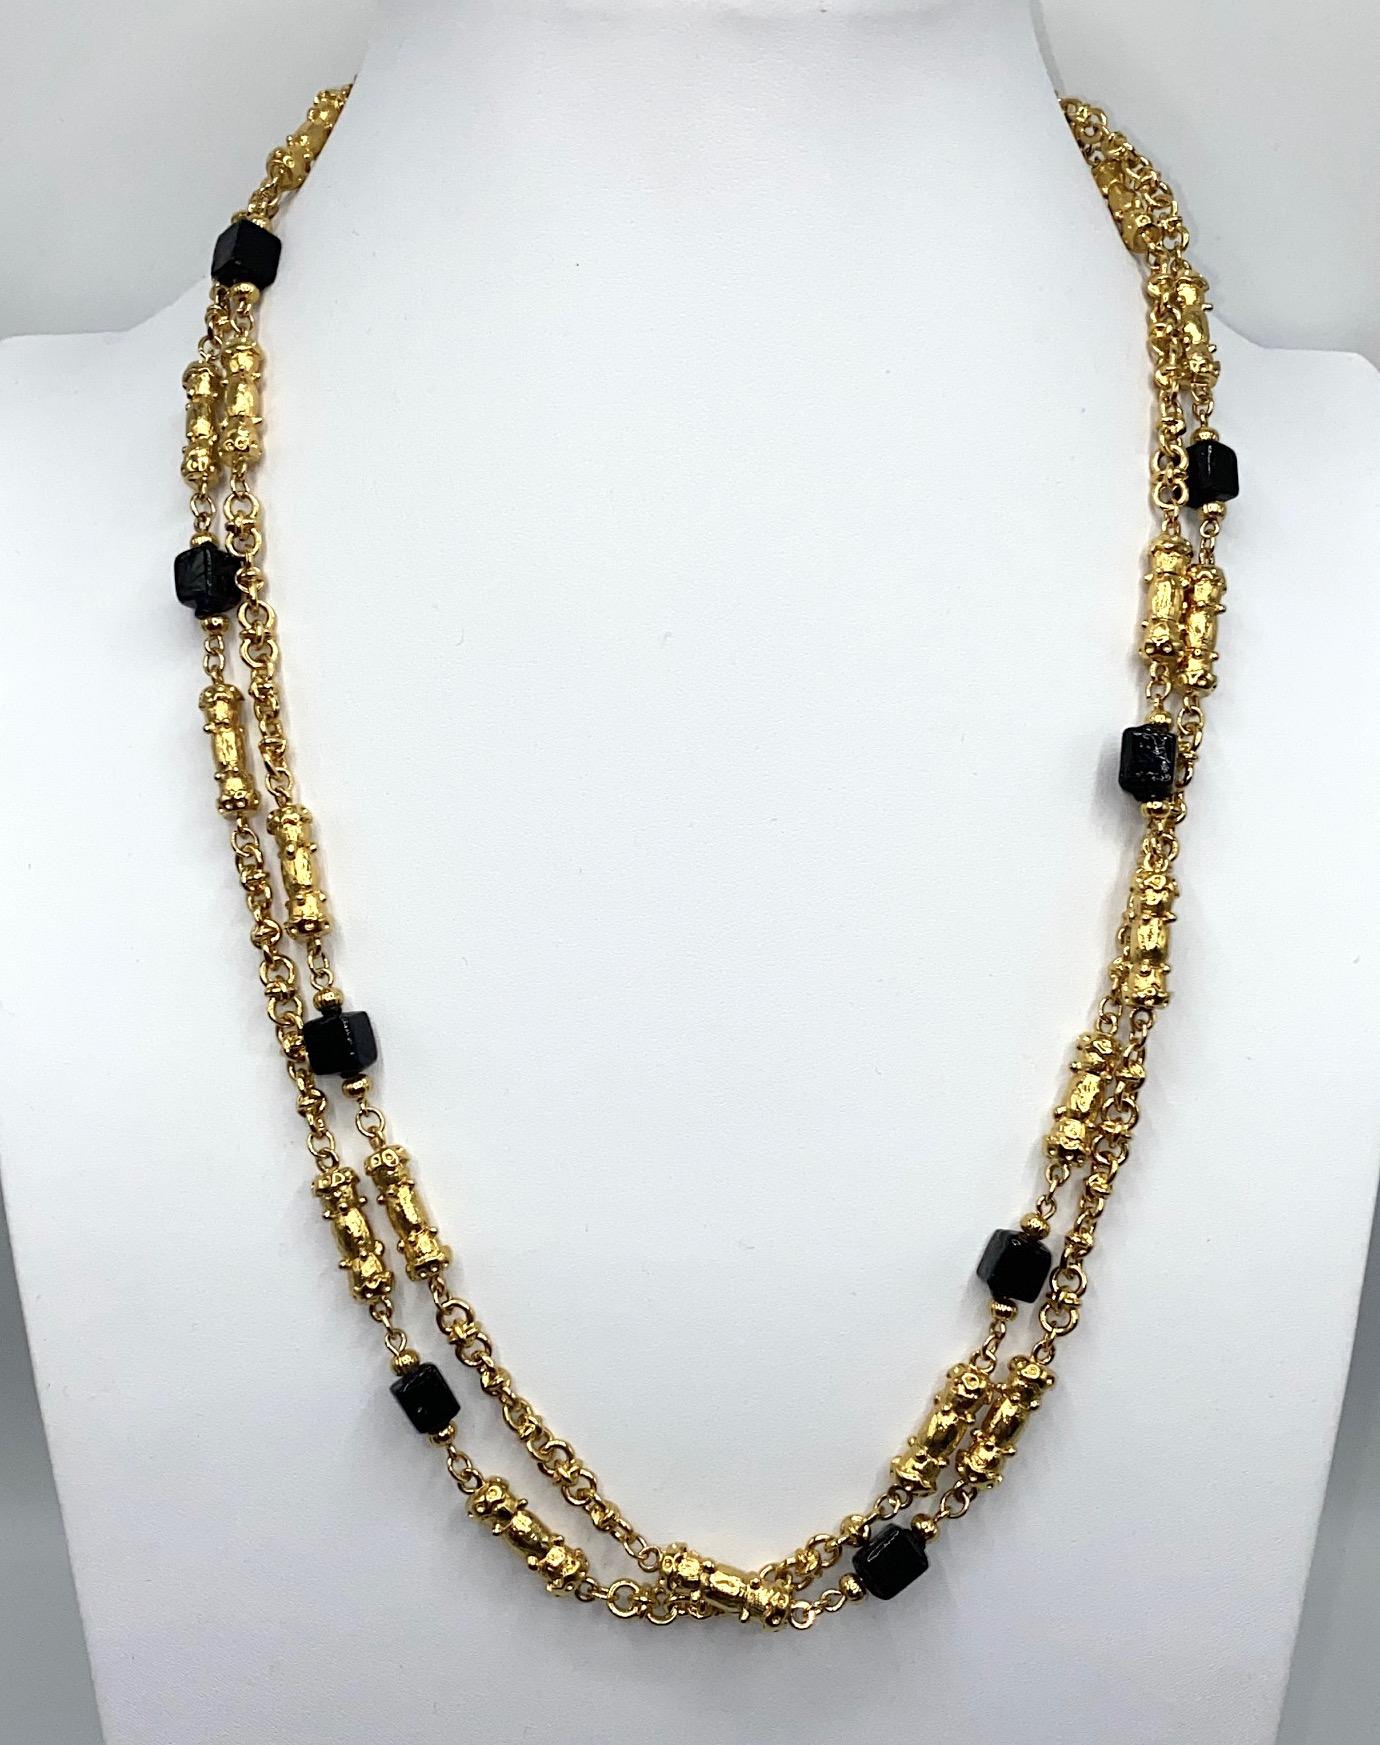 govardhana mudi black beads chain